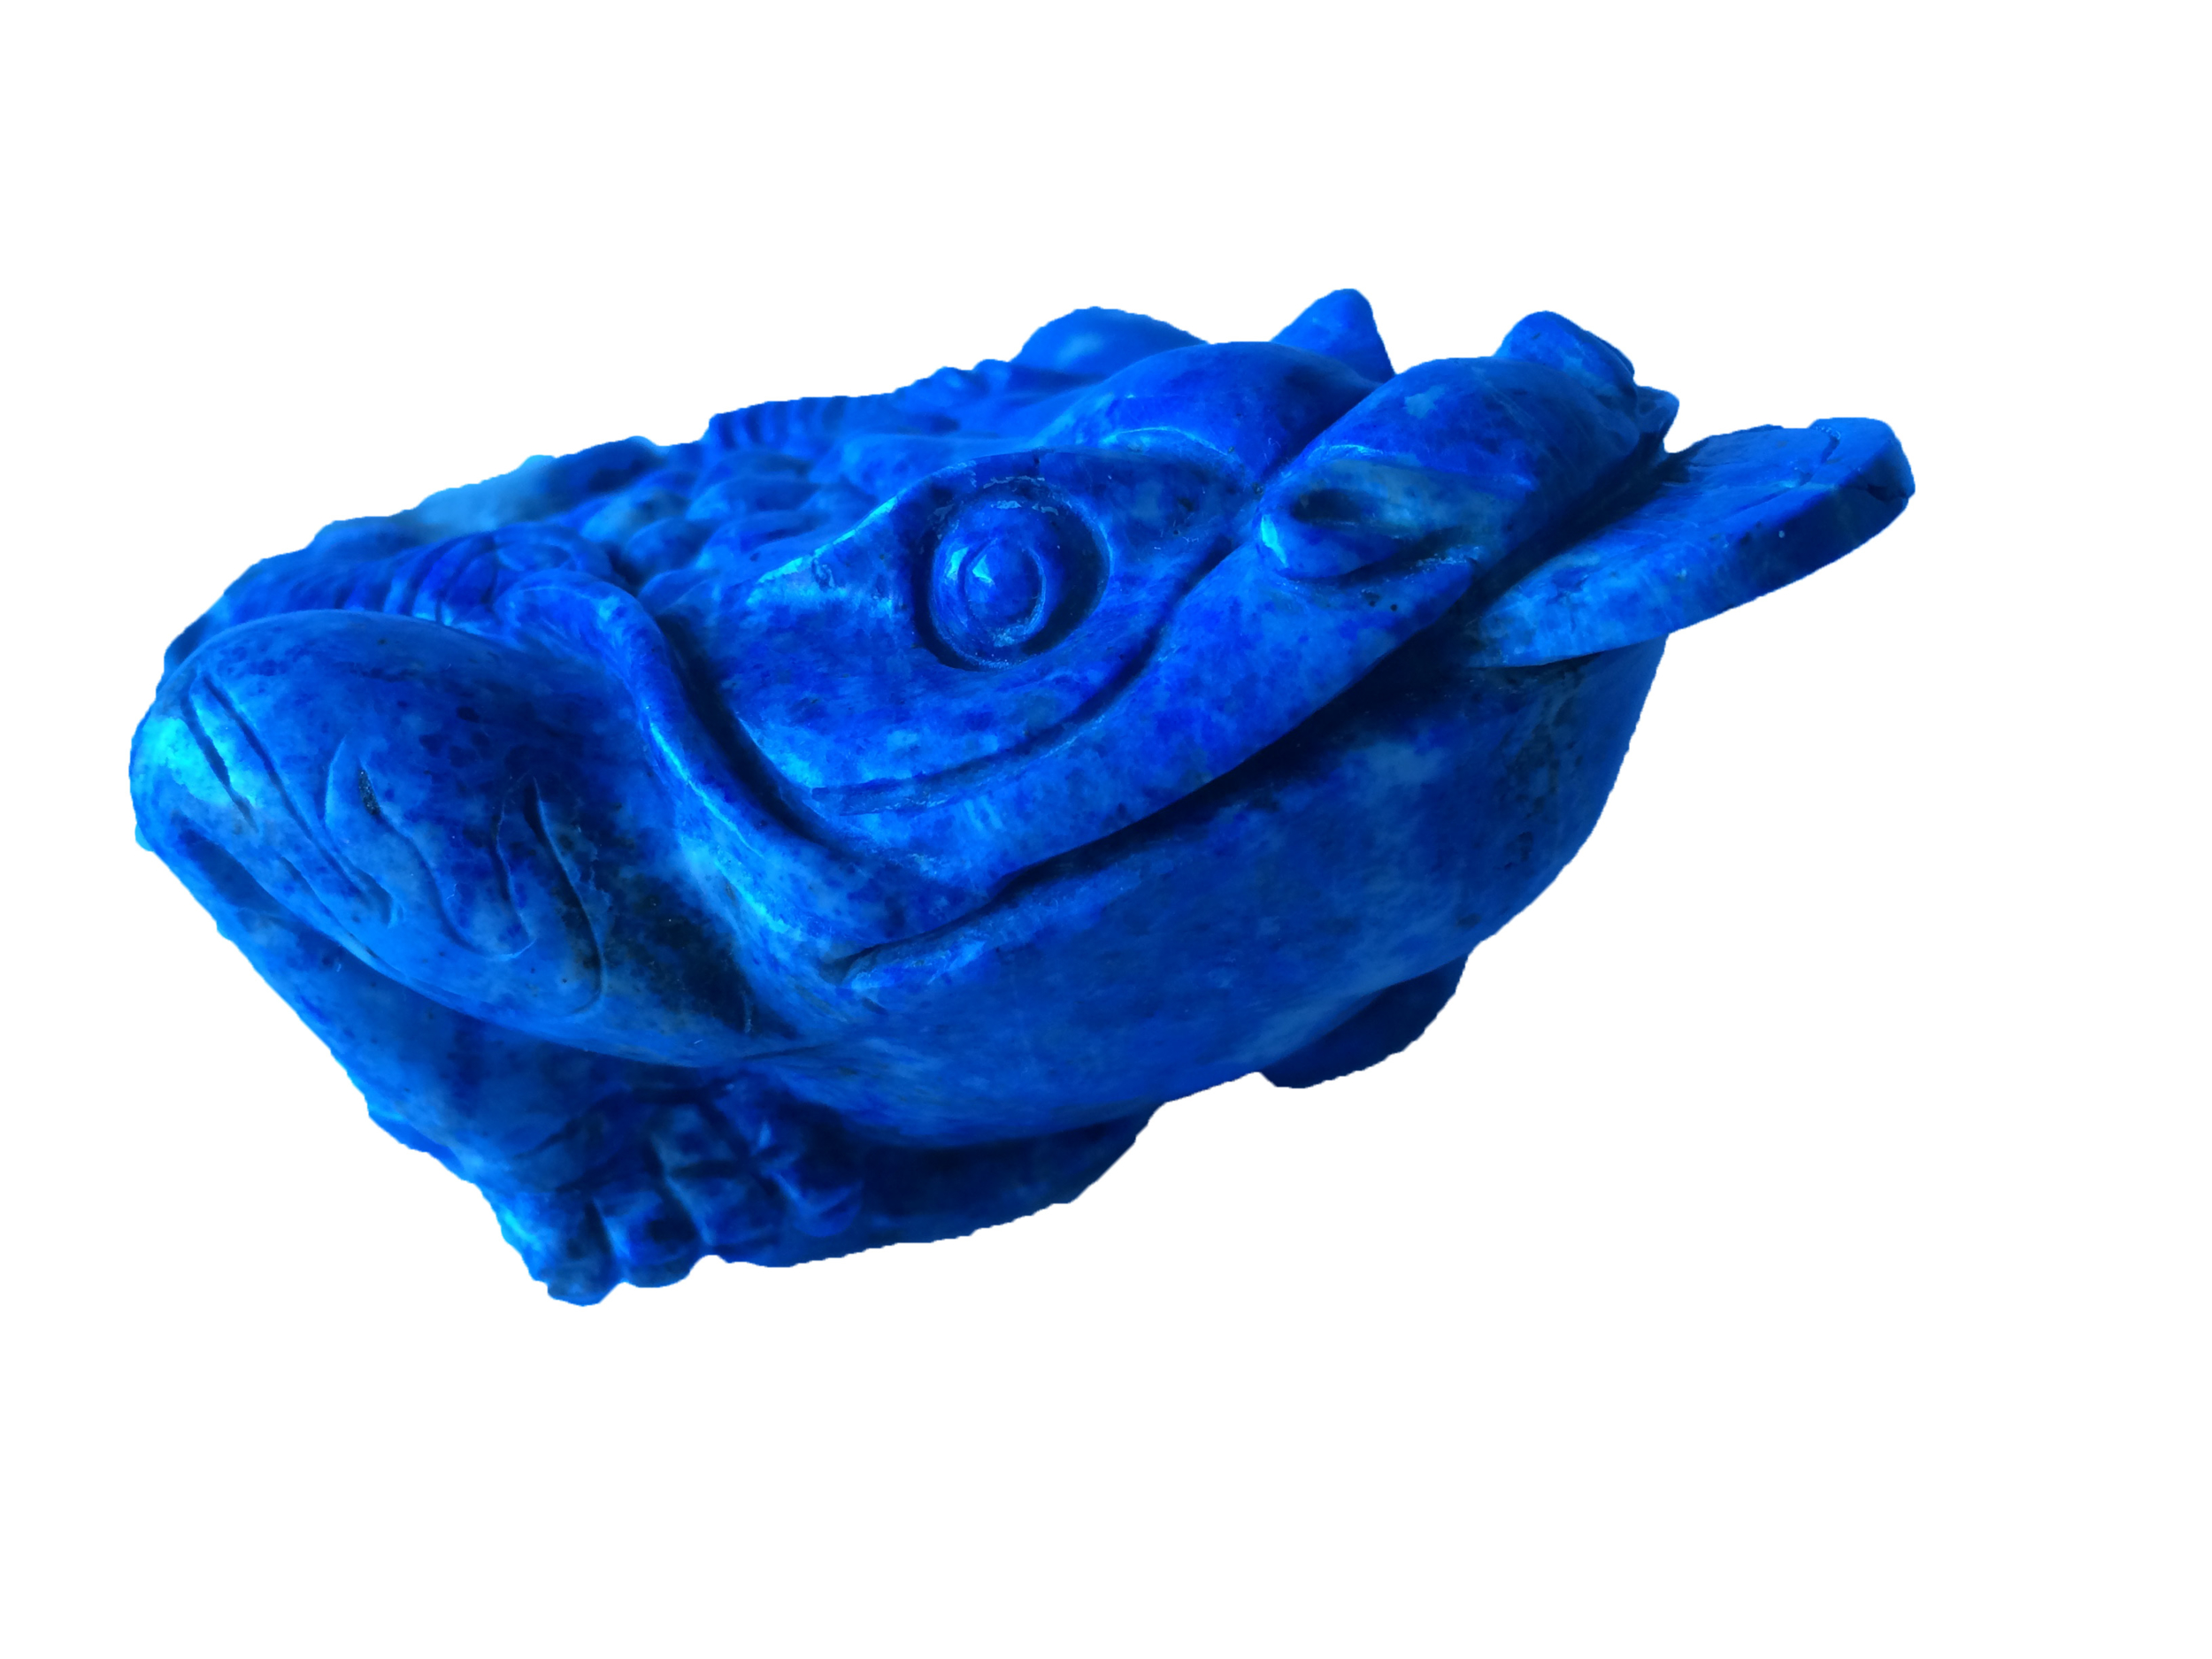 grenouille-de-prosperite-en-lapis-lazuli-pei-441-mi11092009-020-1469879915